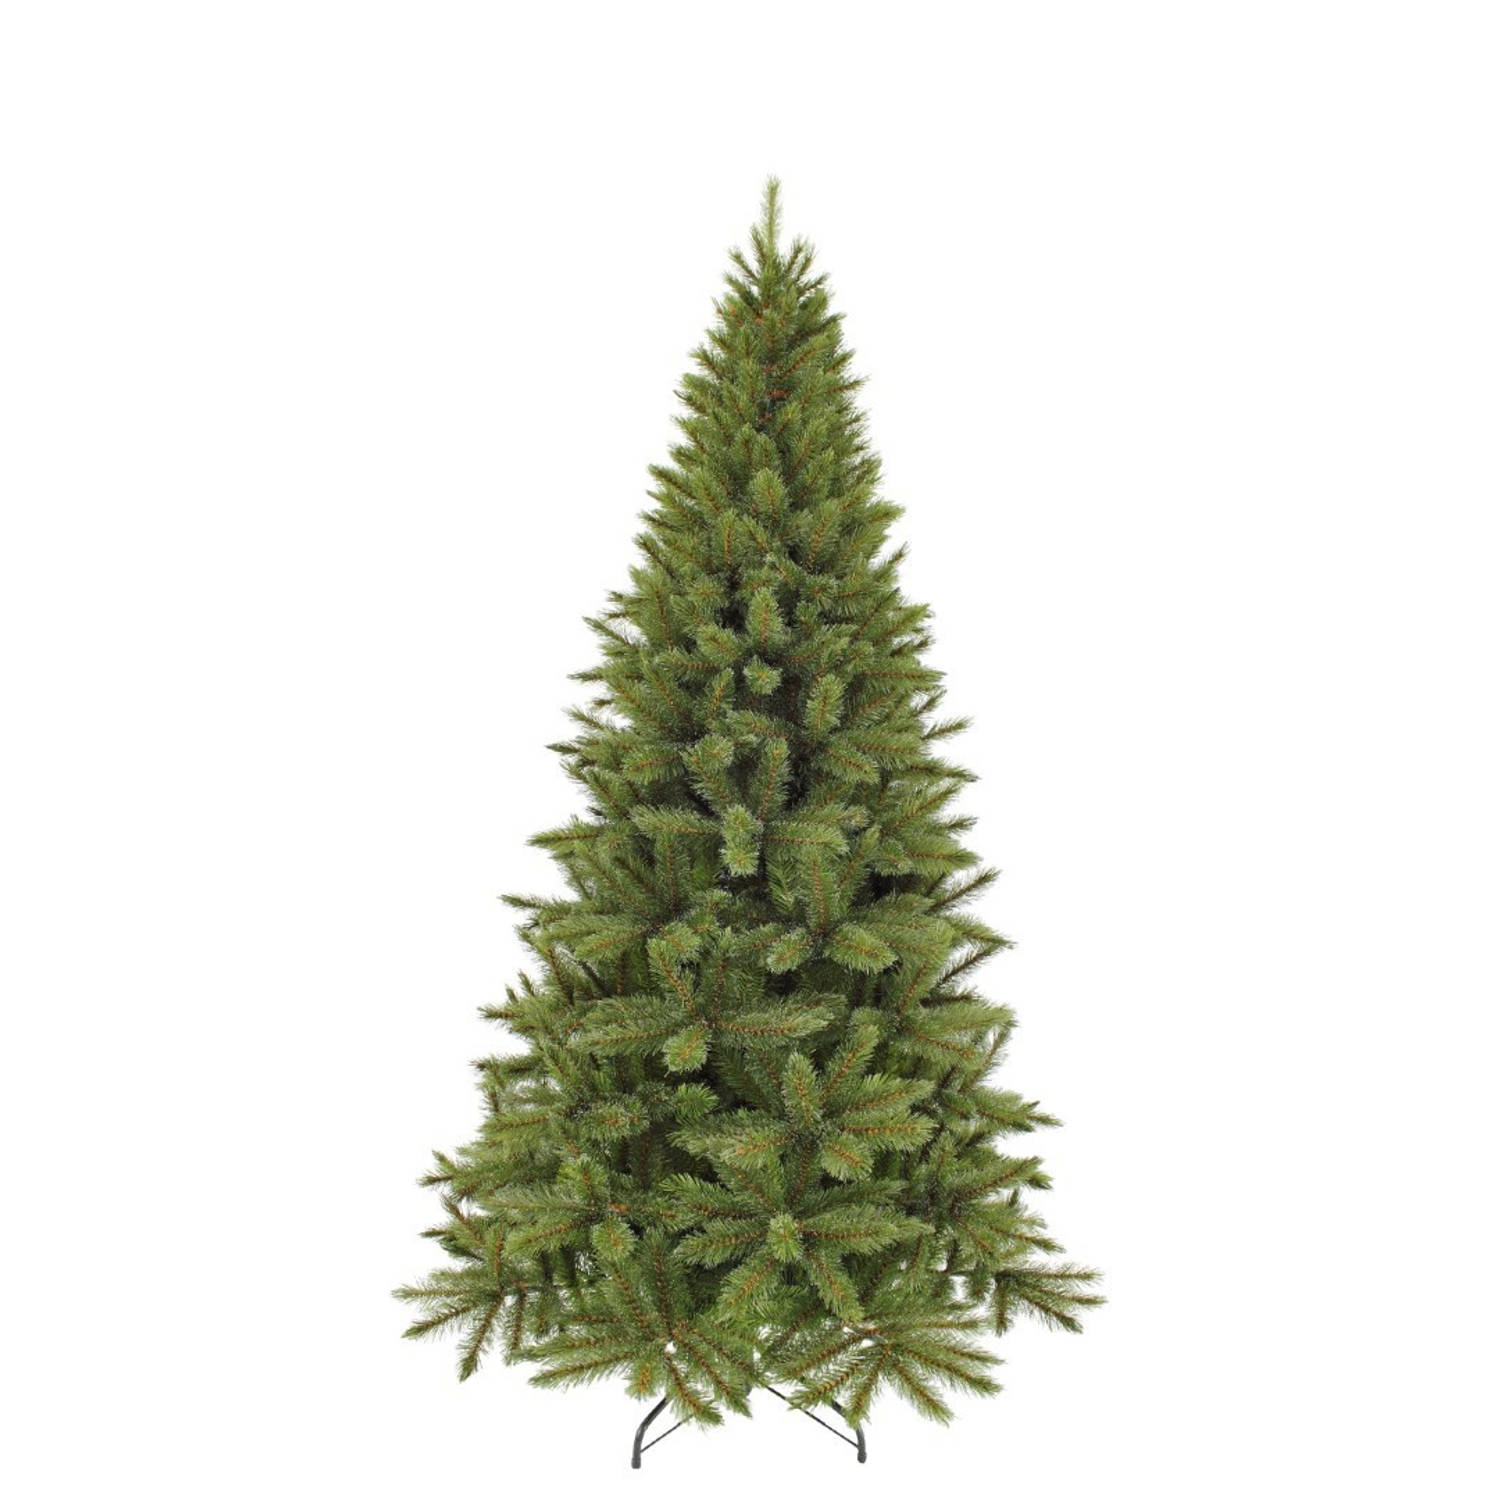 Triumph Tree - Forest Frosted Pine kunstkerstboom groen d117 h215 cm